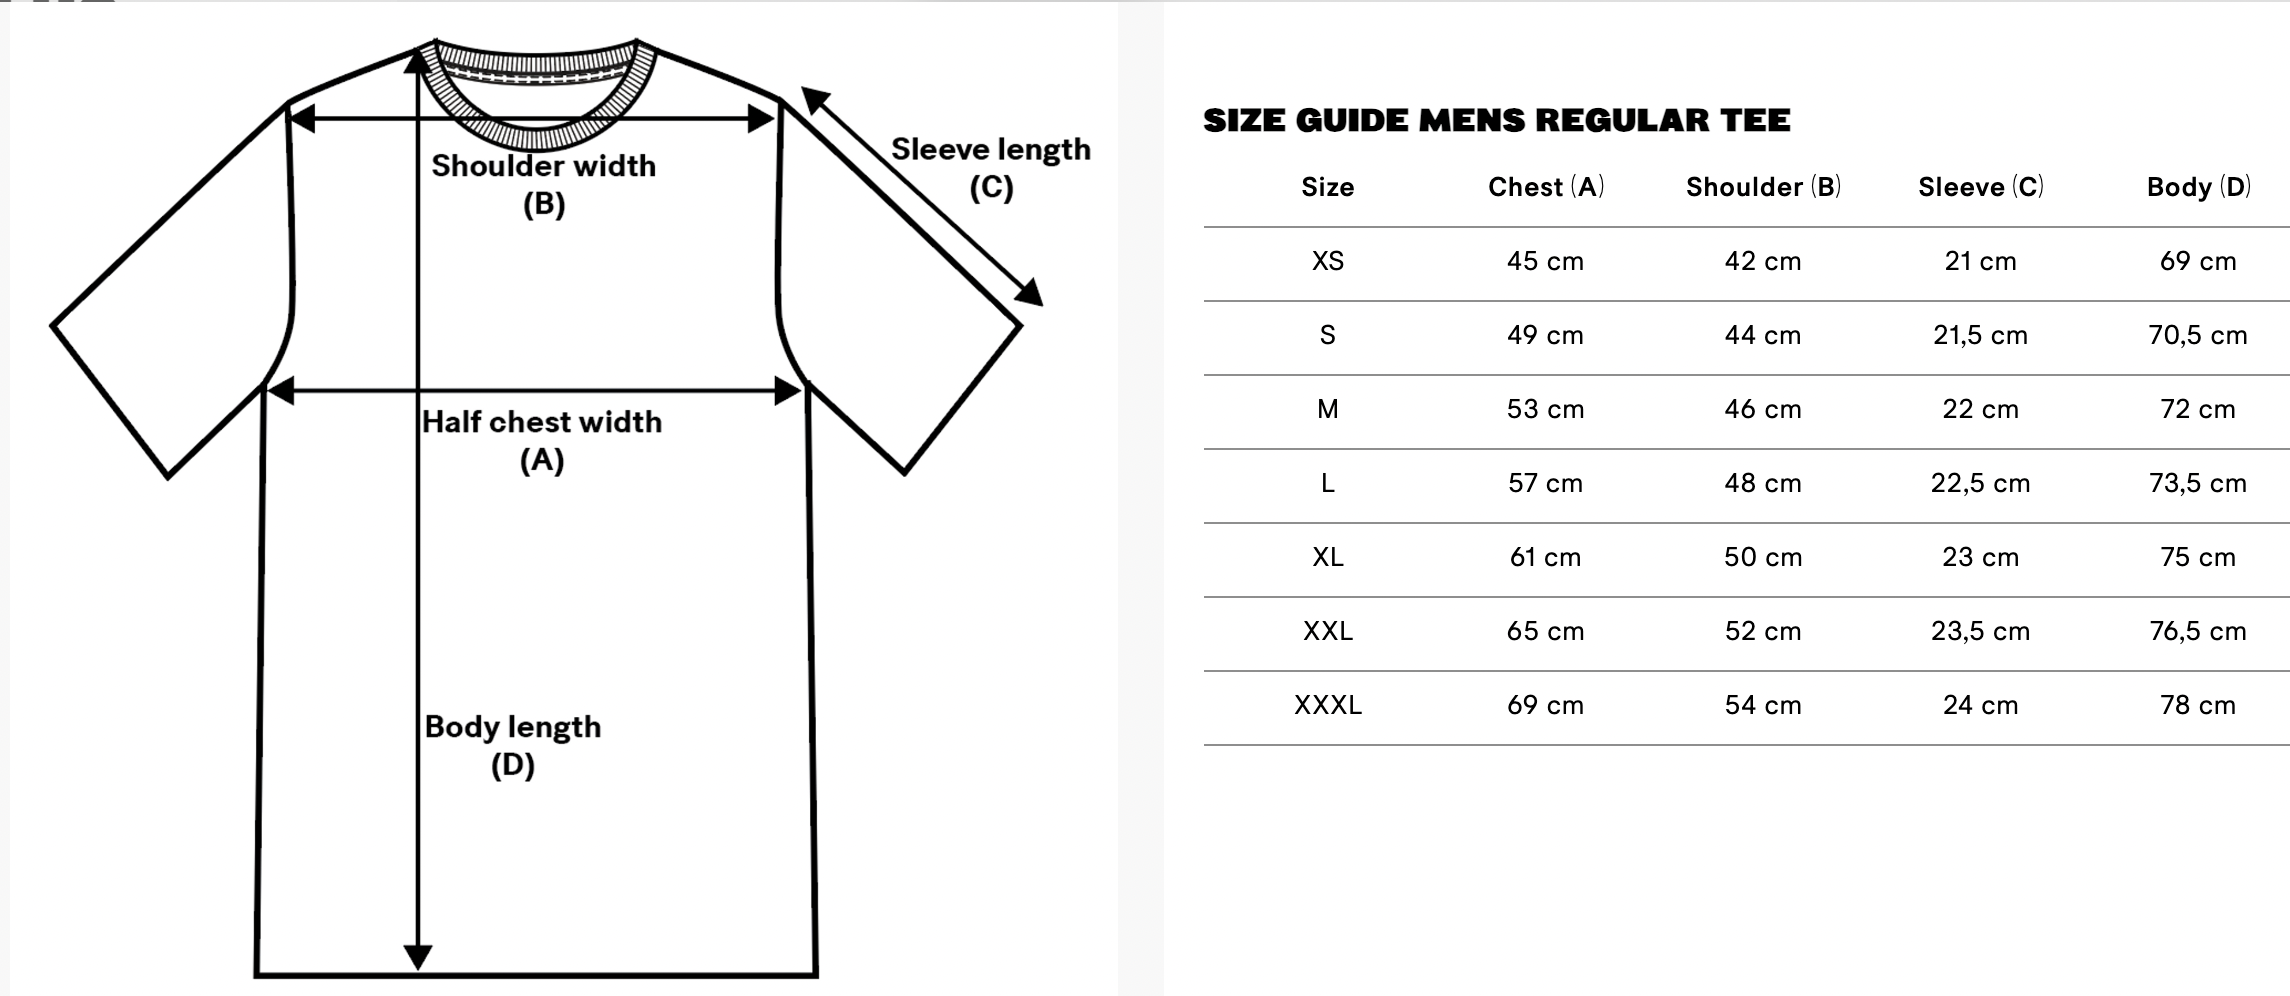 Vegan-skyrider-mends-regular-t-shirt-size-cahrt_c8183a40-ea39-4393-bc62-72607158a858